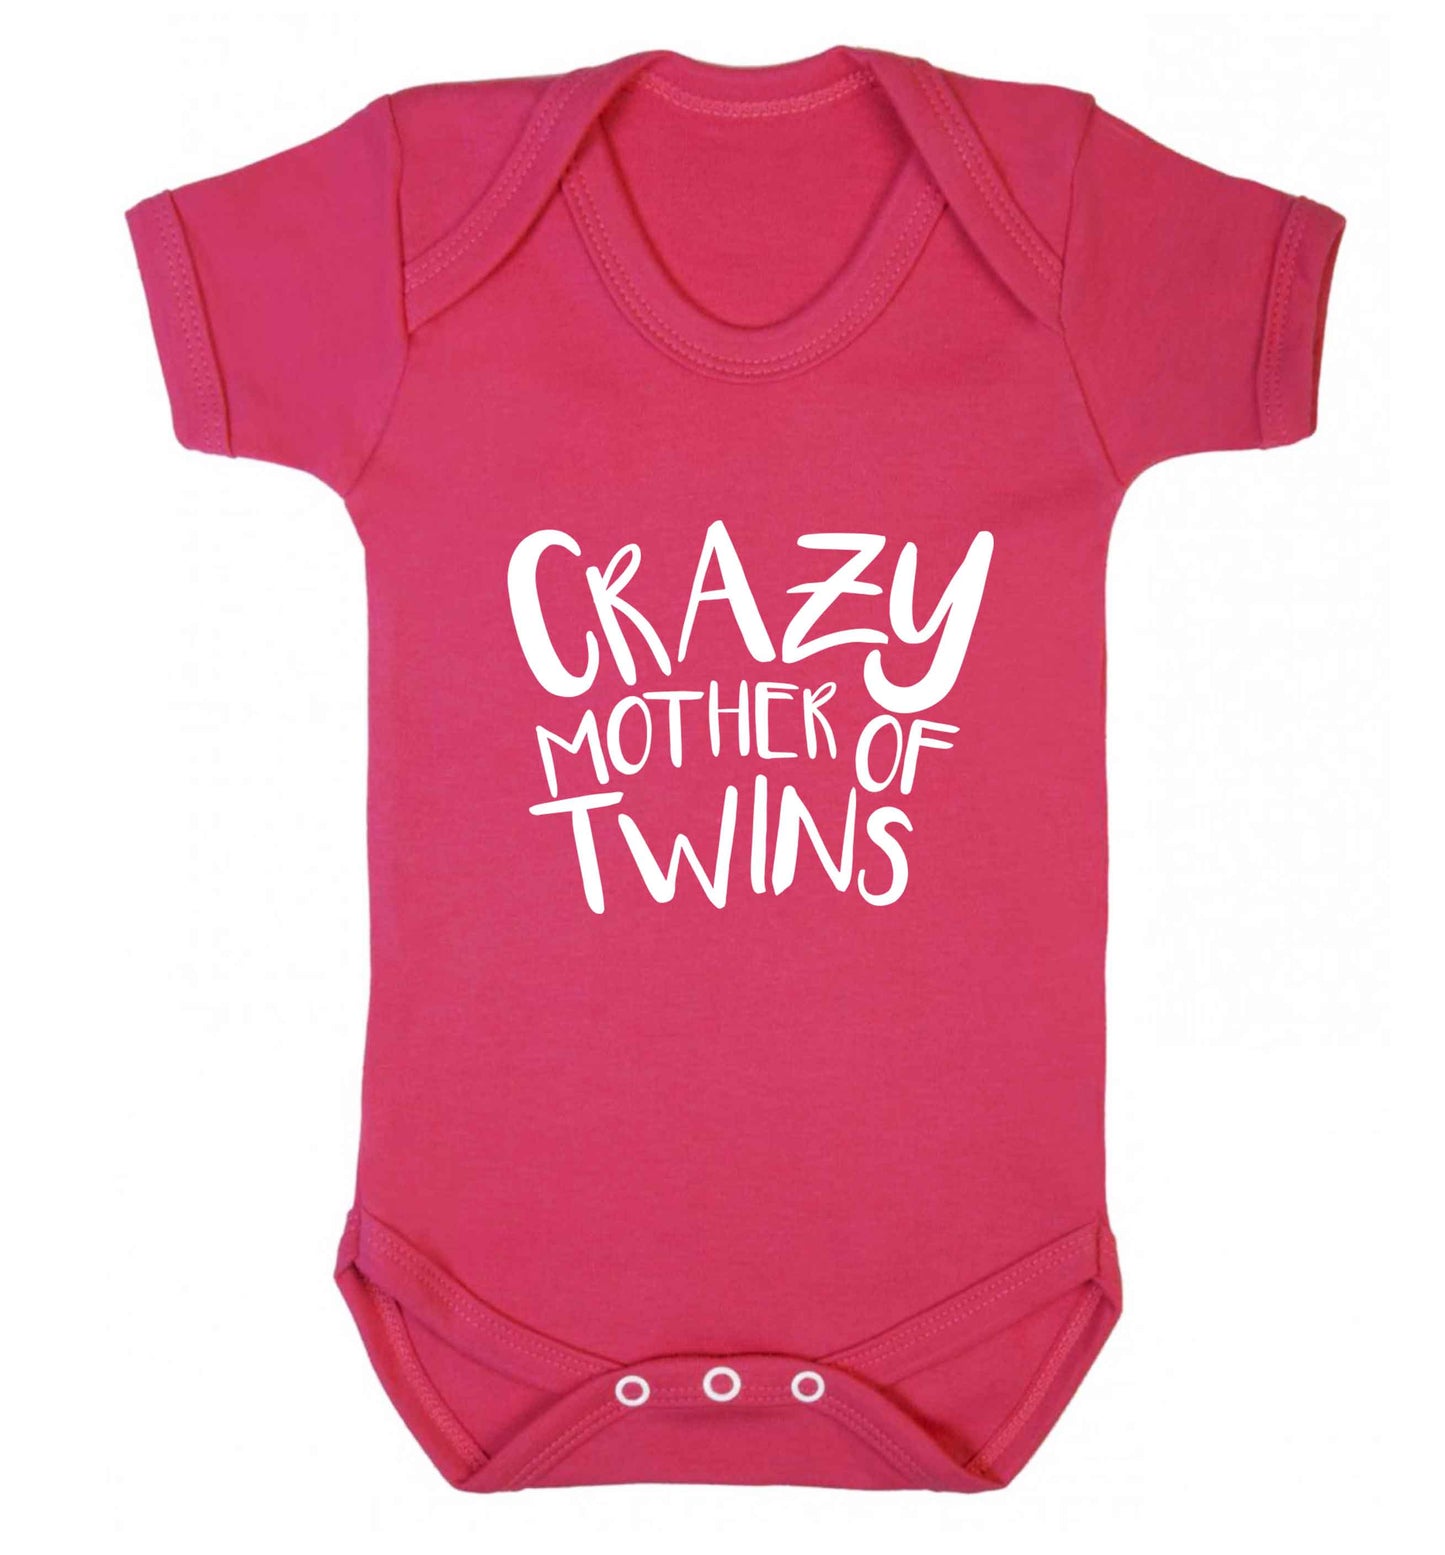 Crazy mother of twins baby vest dark pink 18-24 months